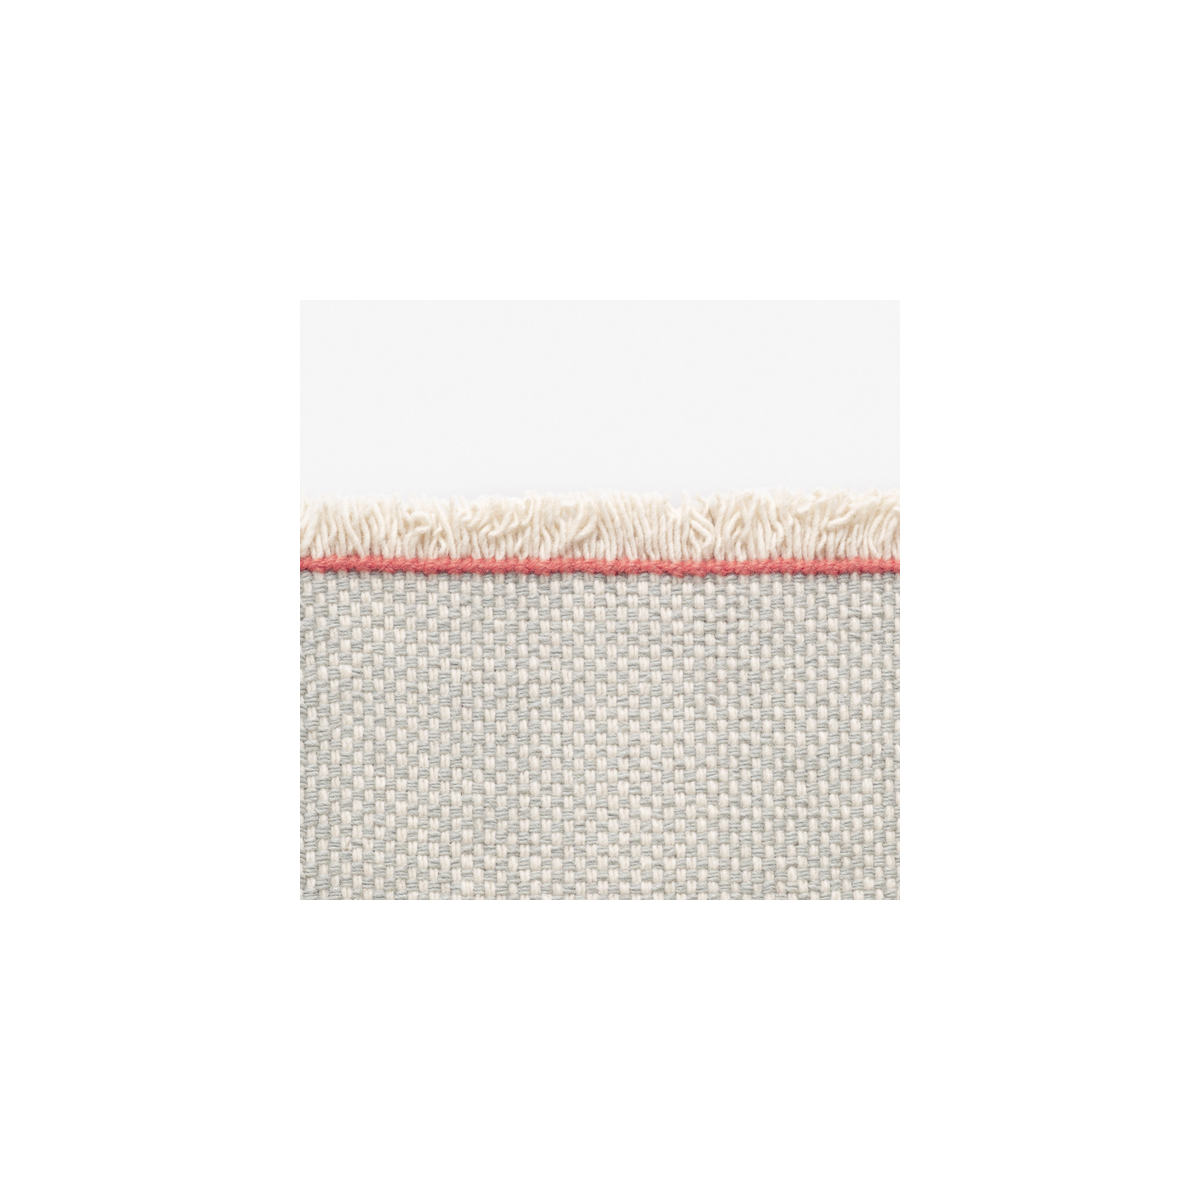 200x300cm - 0721 - Duotone rug